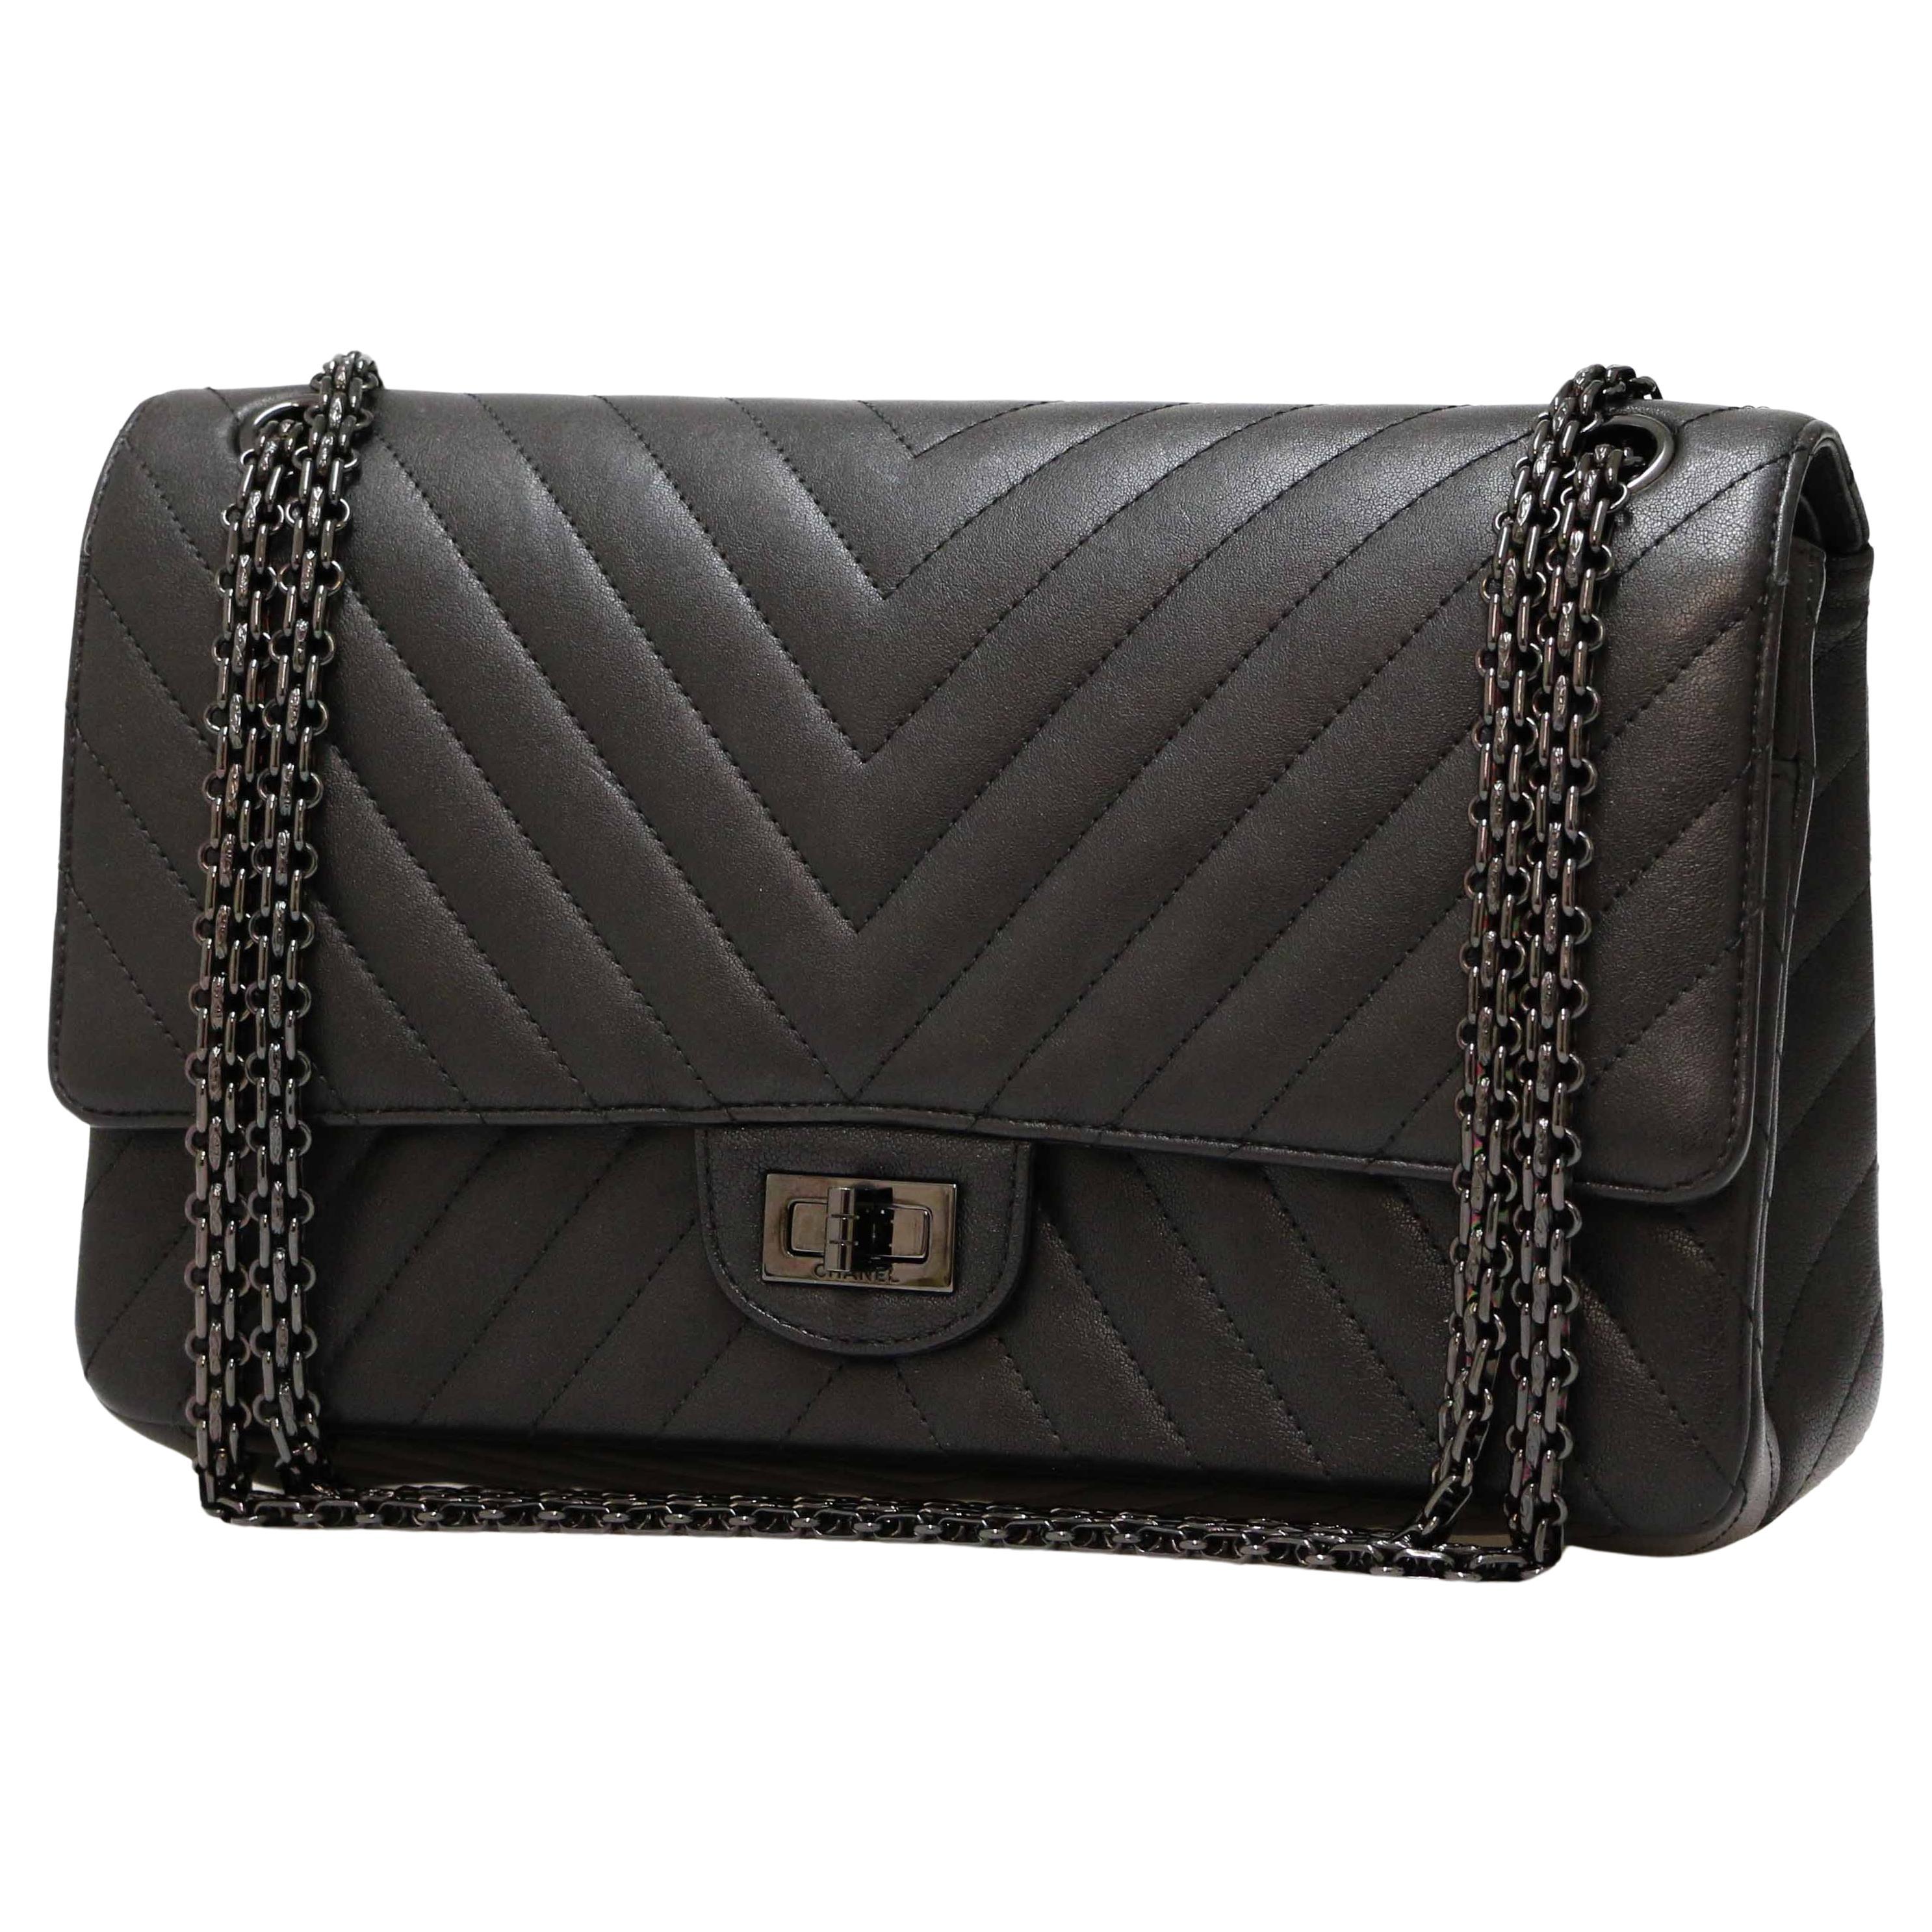 Chanel 255 All Black Bag For Sale